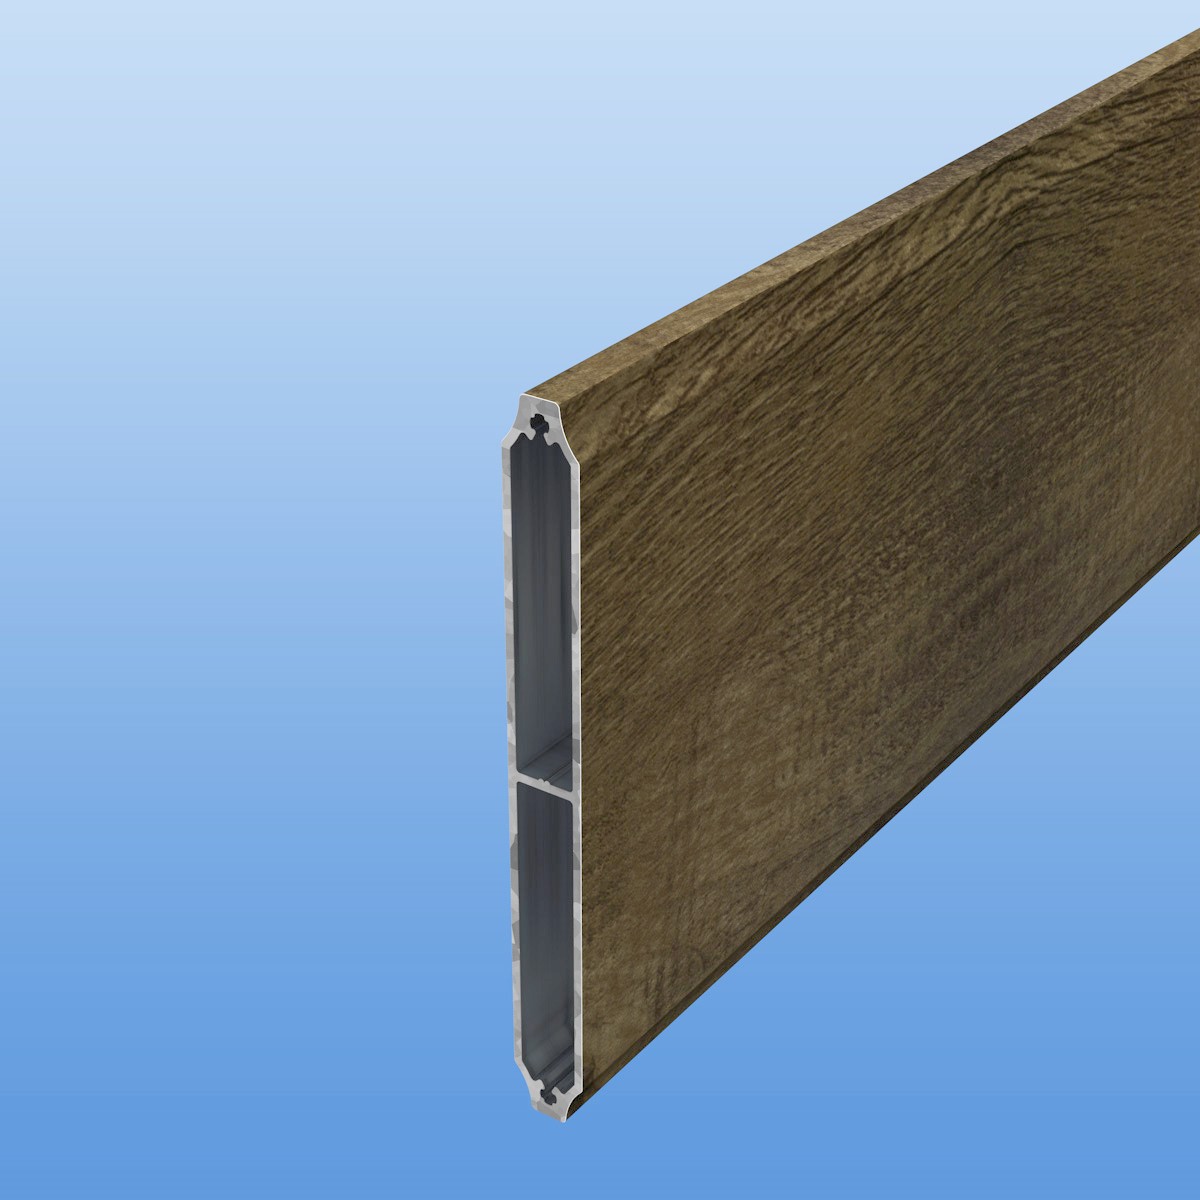 Balkonbretter aus Aluminium 150 mm breit in Holzoptik "Treibholz" - konkav